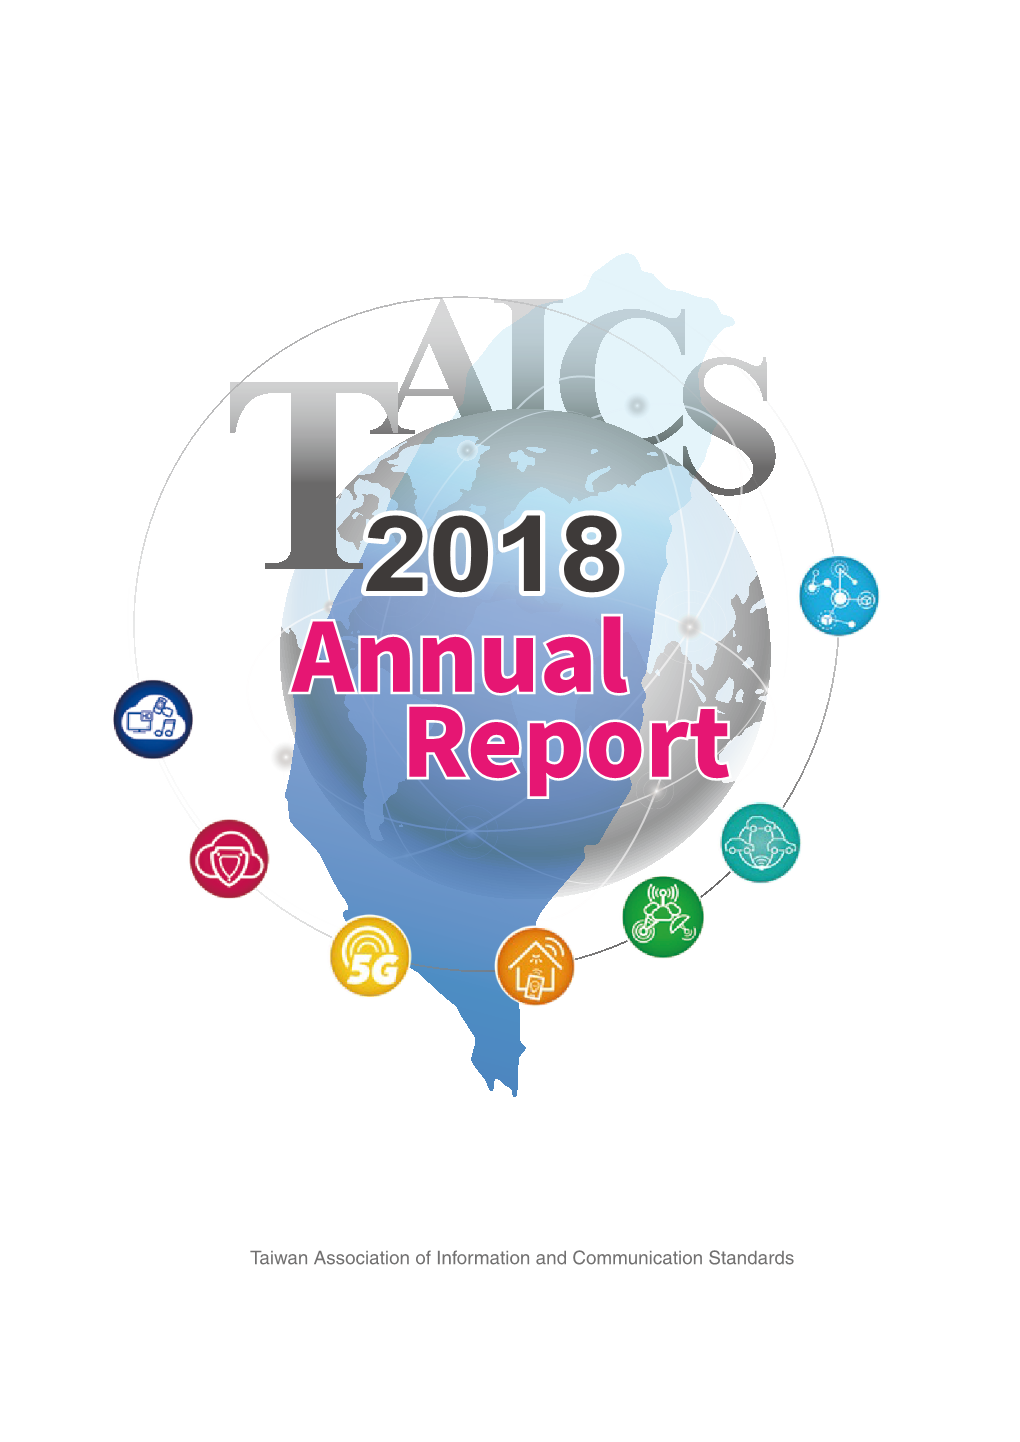 TAICS 2018 Annual Report